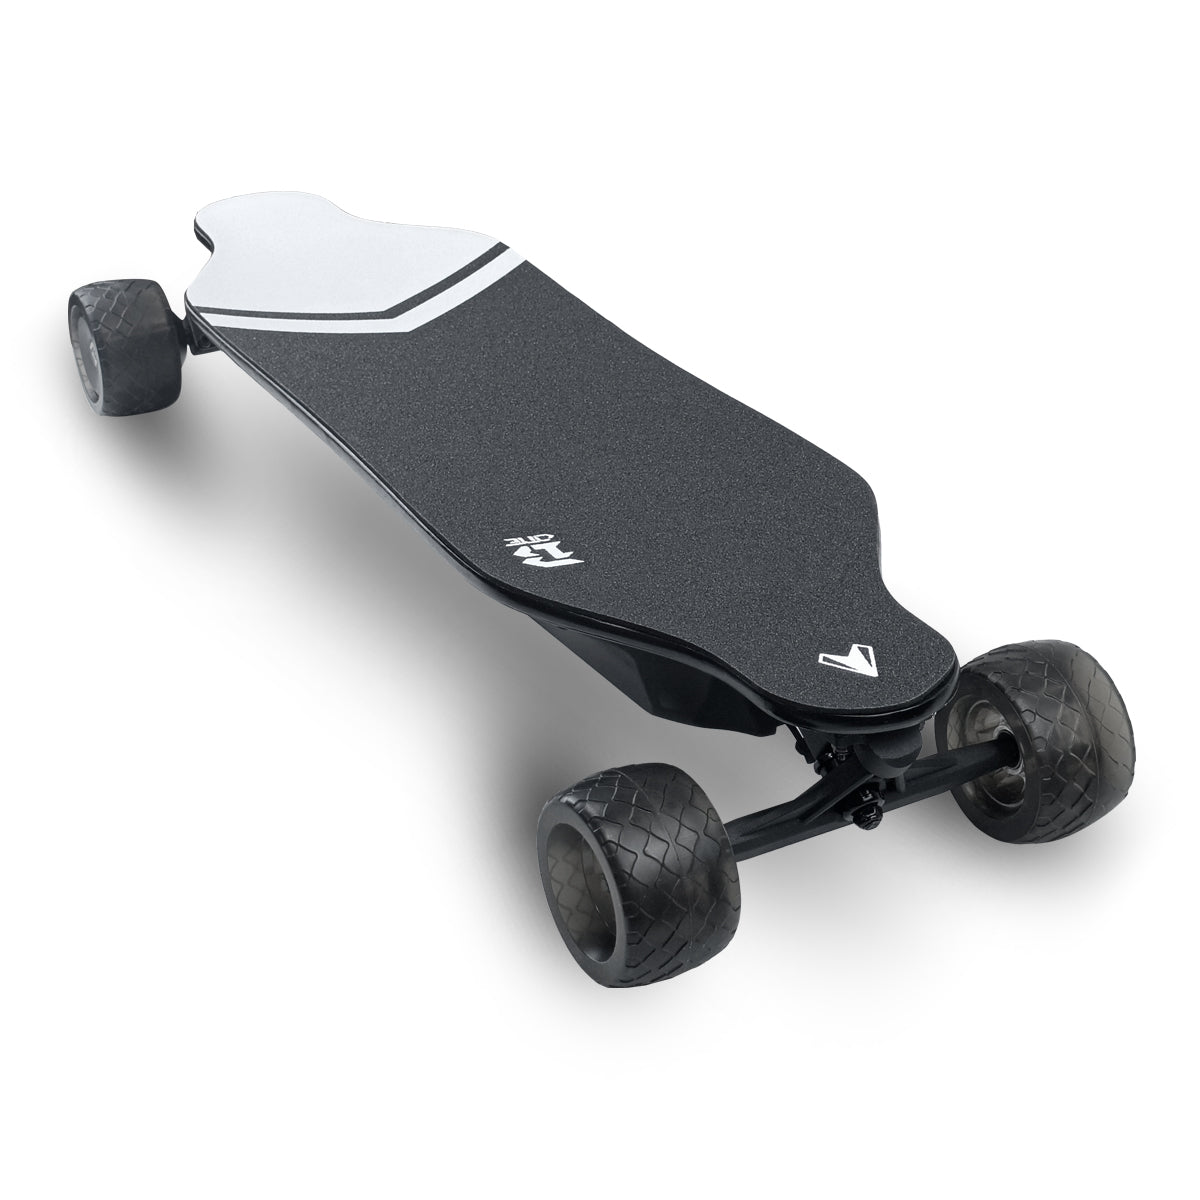 Falcon Electric Skateboard